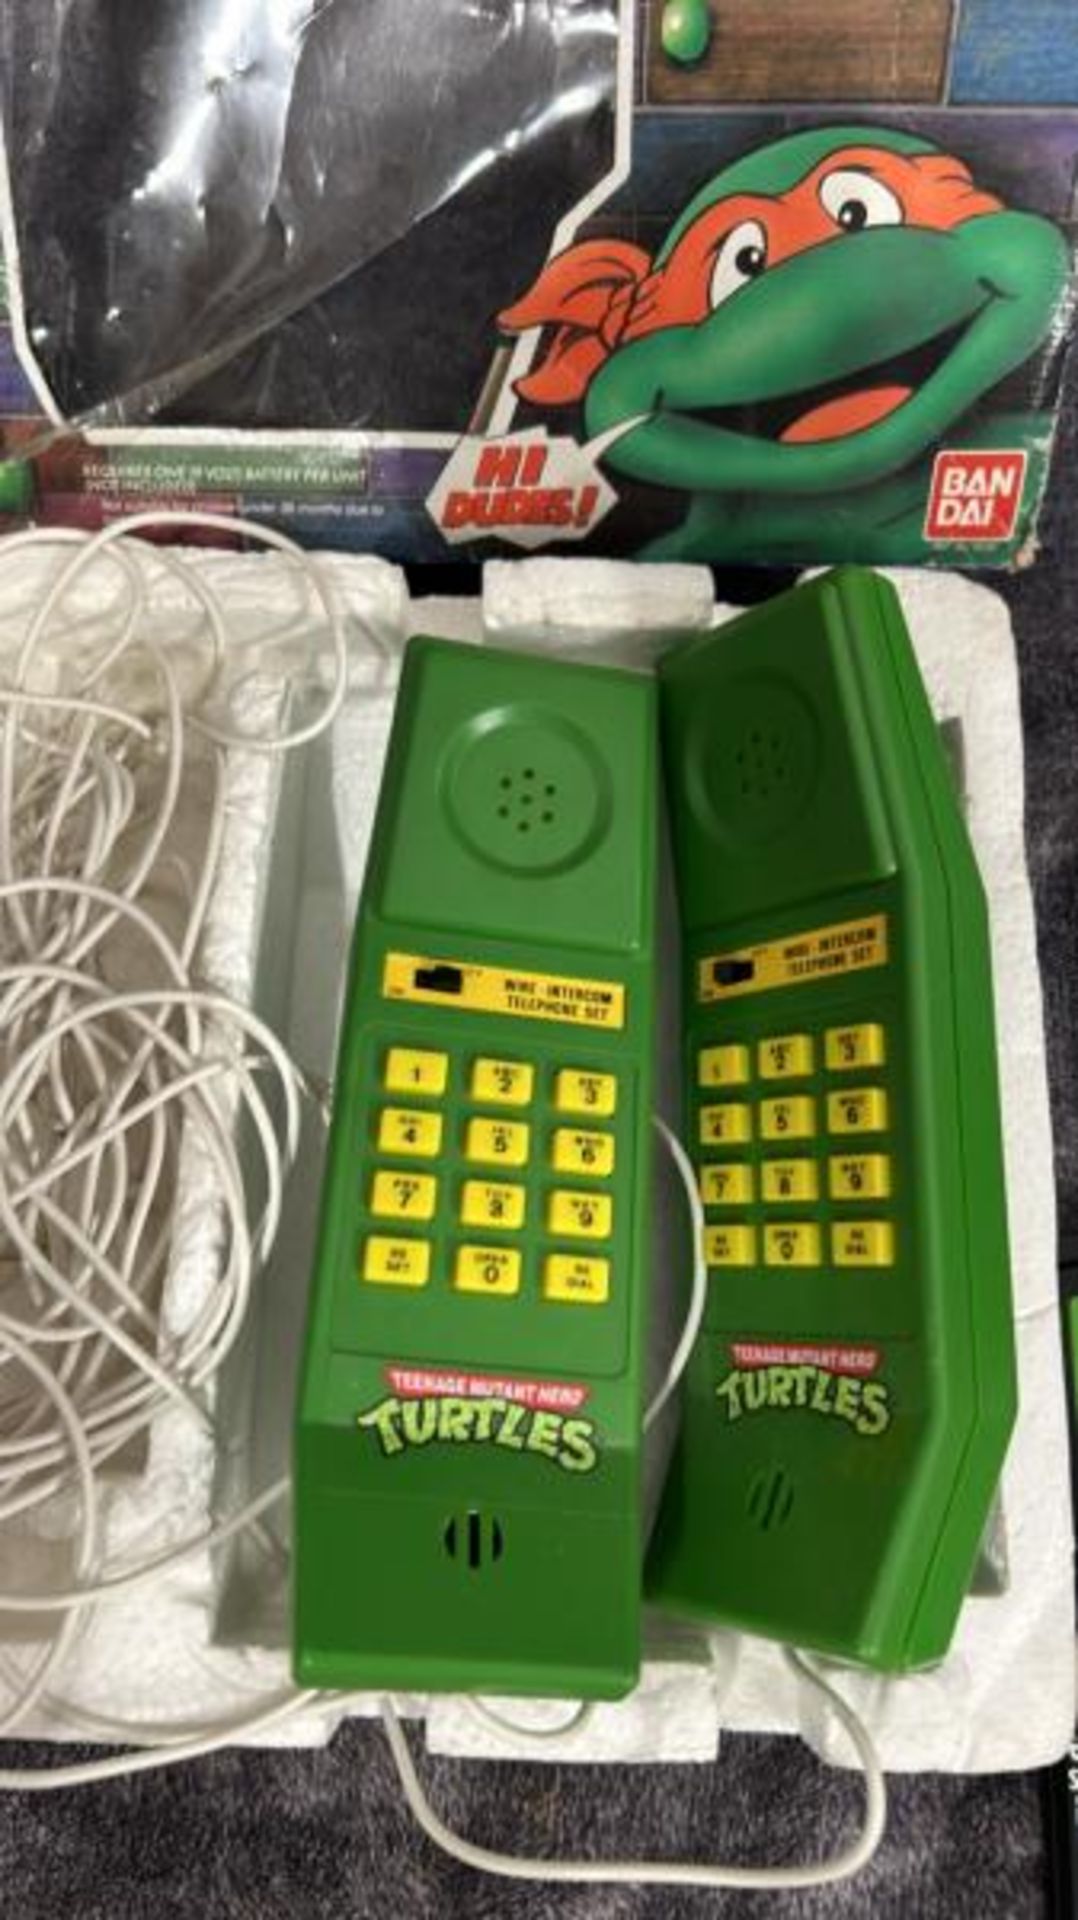 Teenage Mutant Hero Turtles - boxed Ban Dai Intercom telephone toy, Turtles VI game for Super - Image 2 of 6